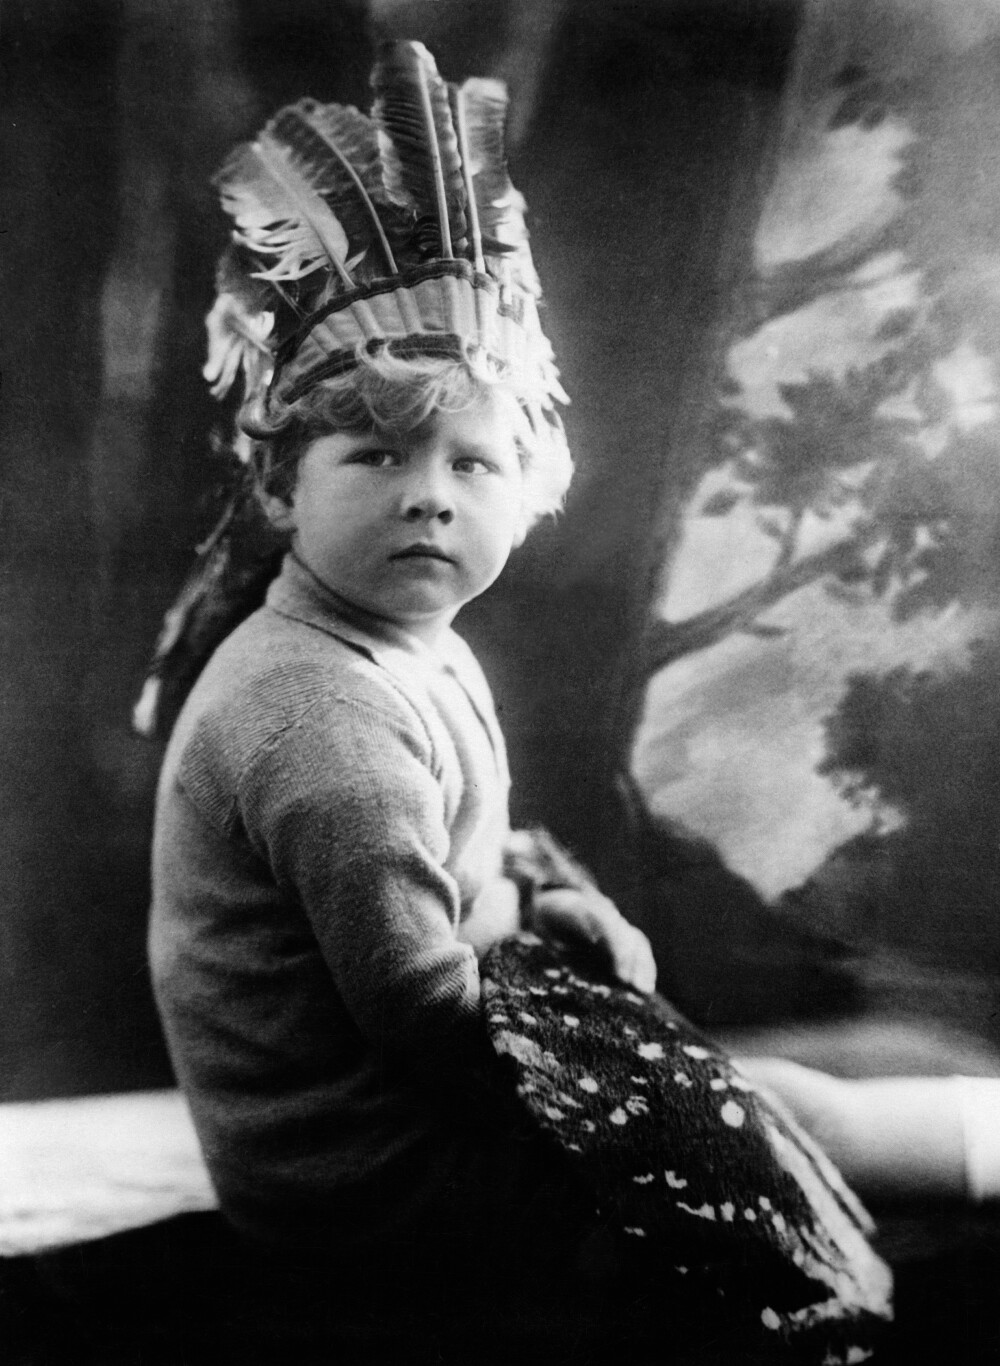 Regele Mihai implineste astazi 95 de ani. Mesajul Principesei Margareta - Imaginea 11